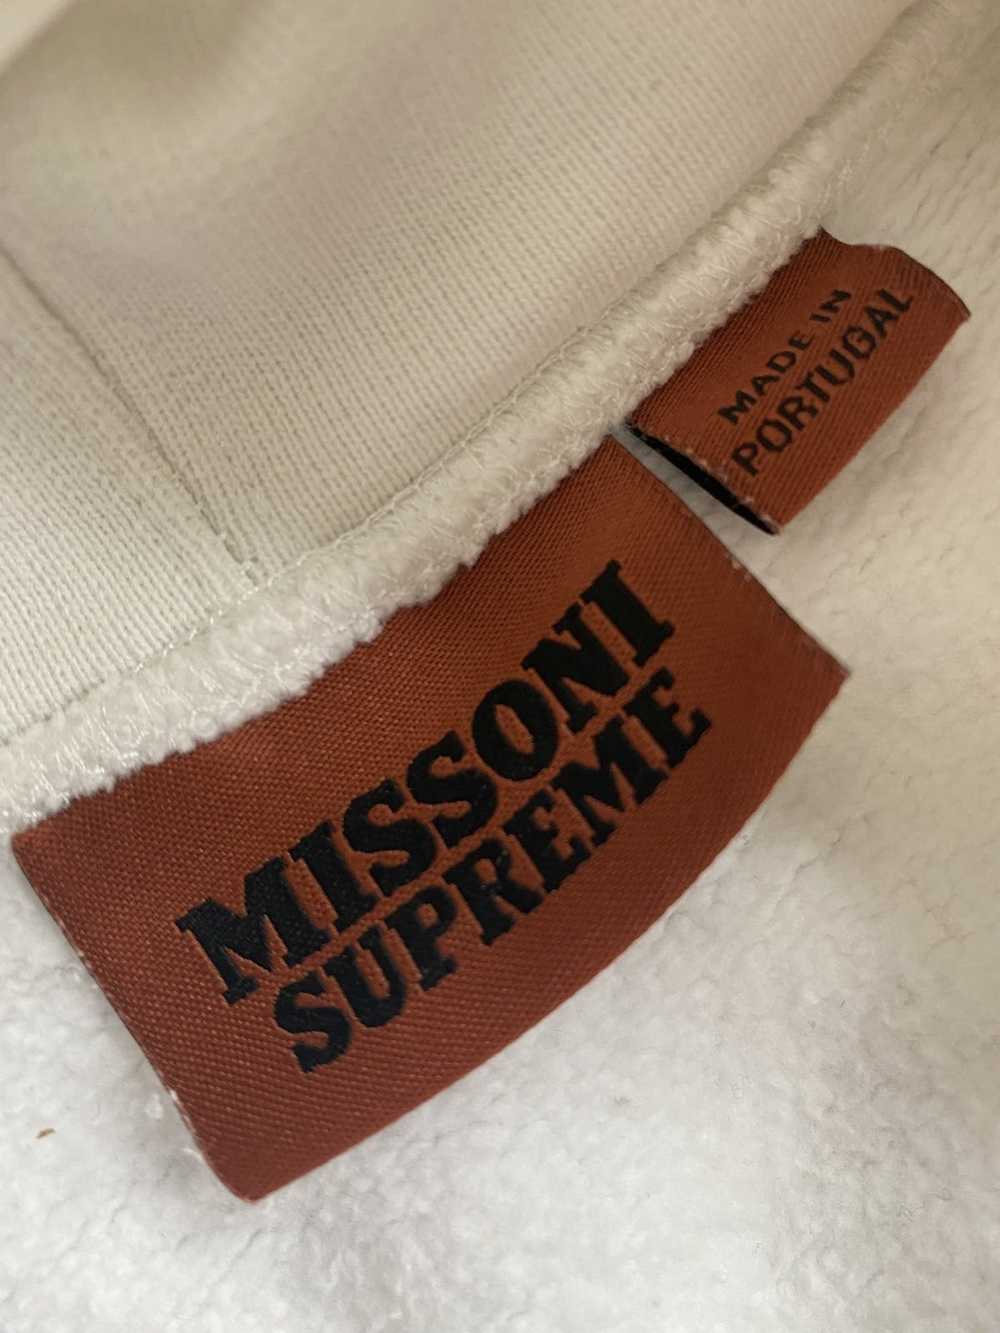 SUPREME MISSONI Hooded Sweatshirt Brown EXTRA LARGE Supreme Hoodie Brand New